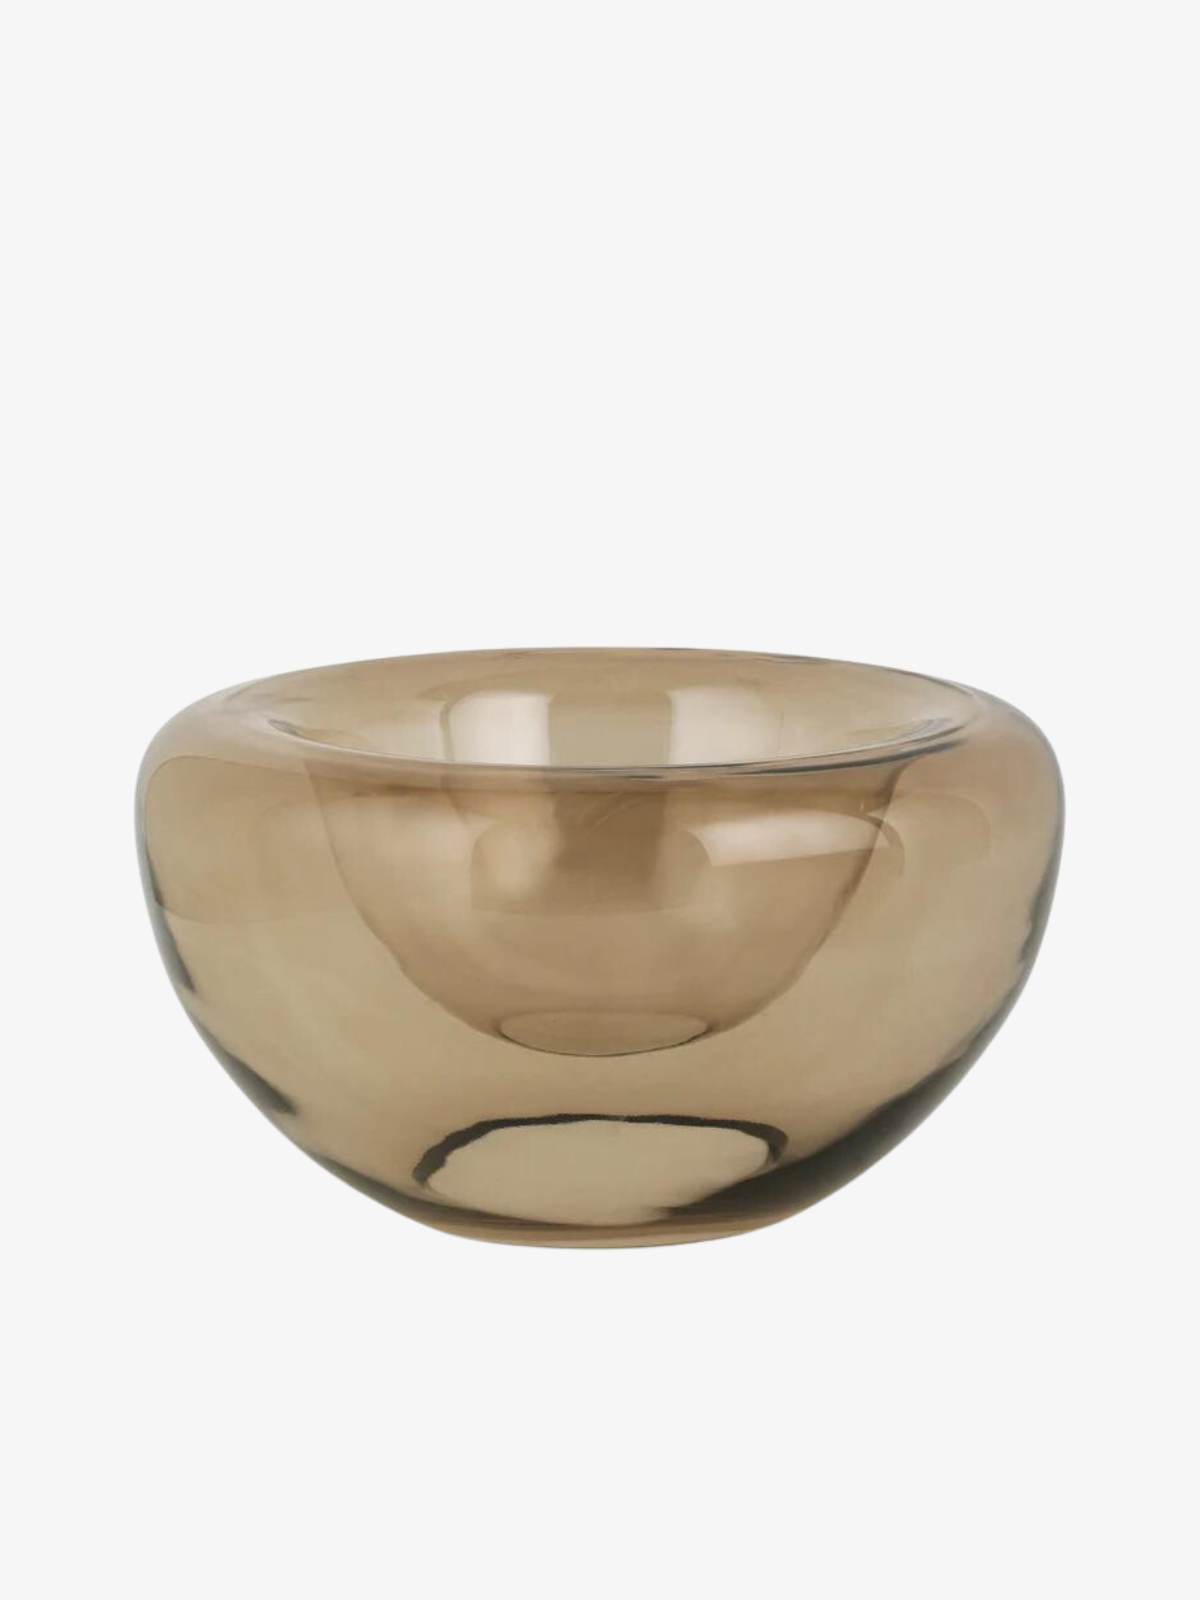 Opal Glass Bowl Large - Topaz Brown by KDAM